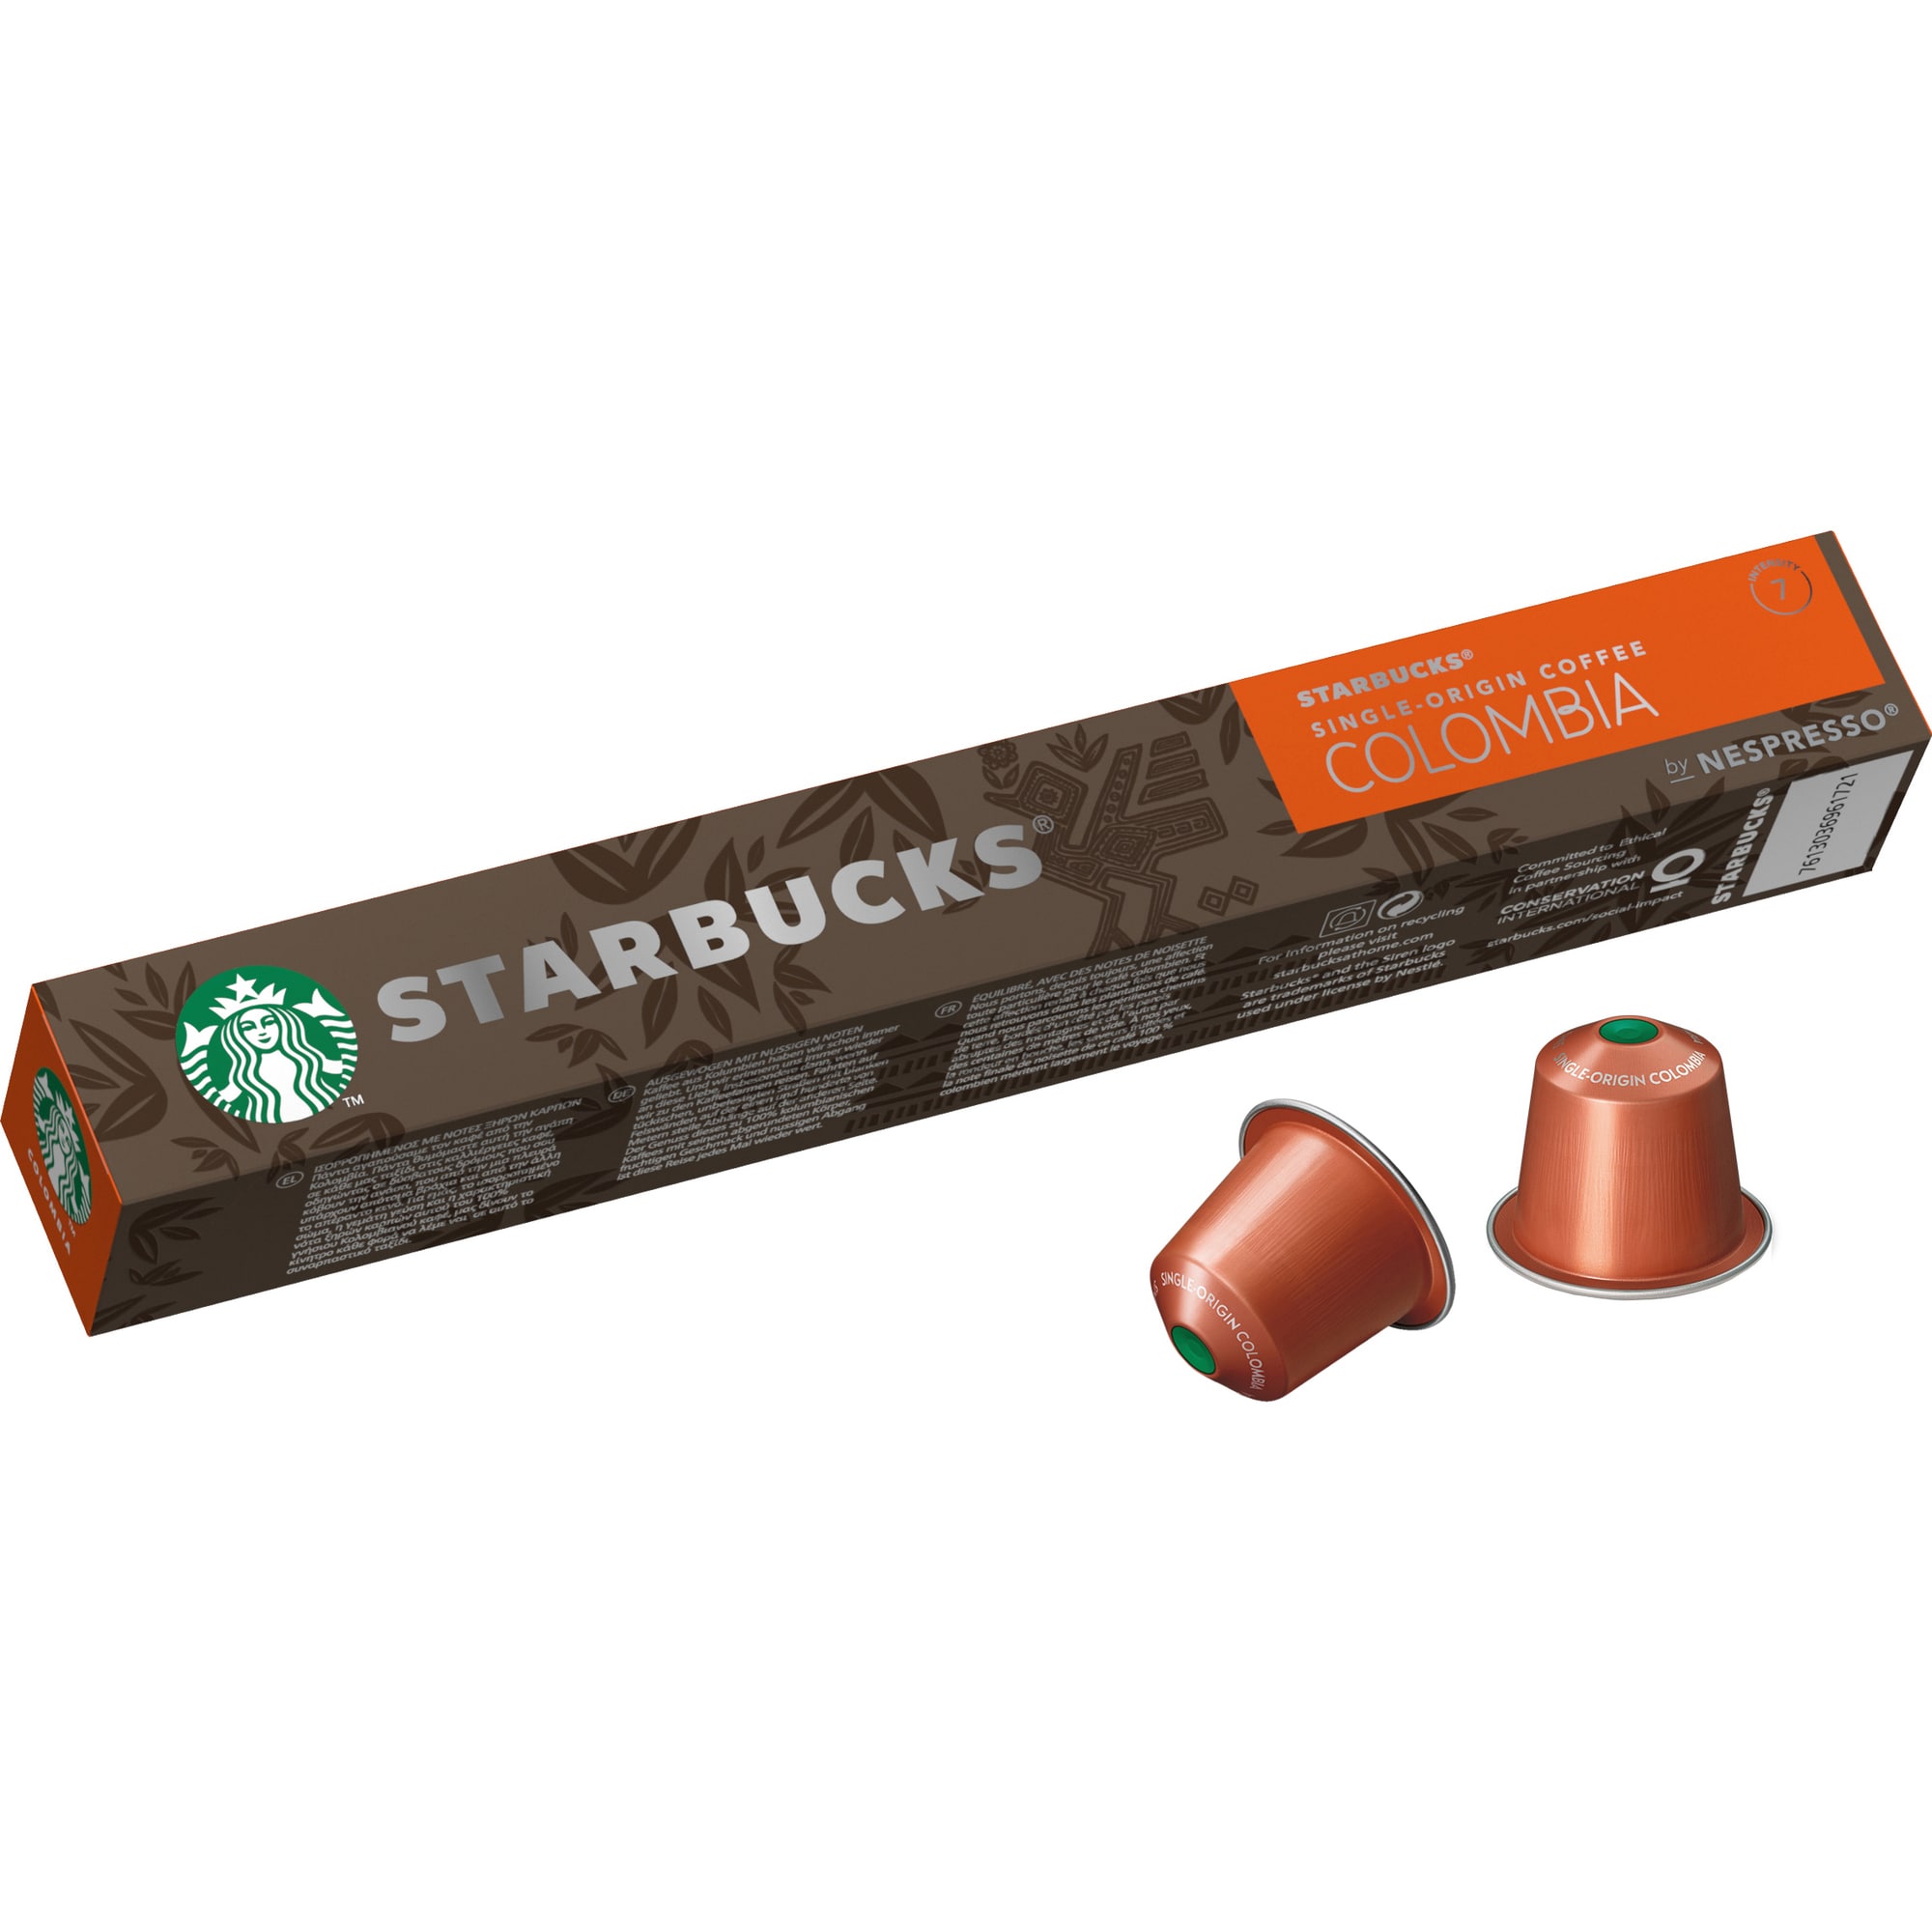 Starbucks by Nespresso Single-Origin Colombia kapsler ST12429169 ...